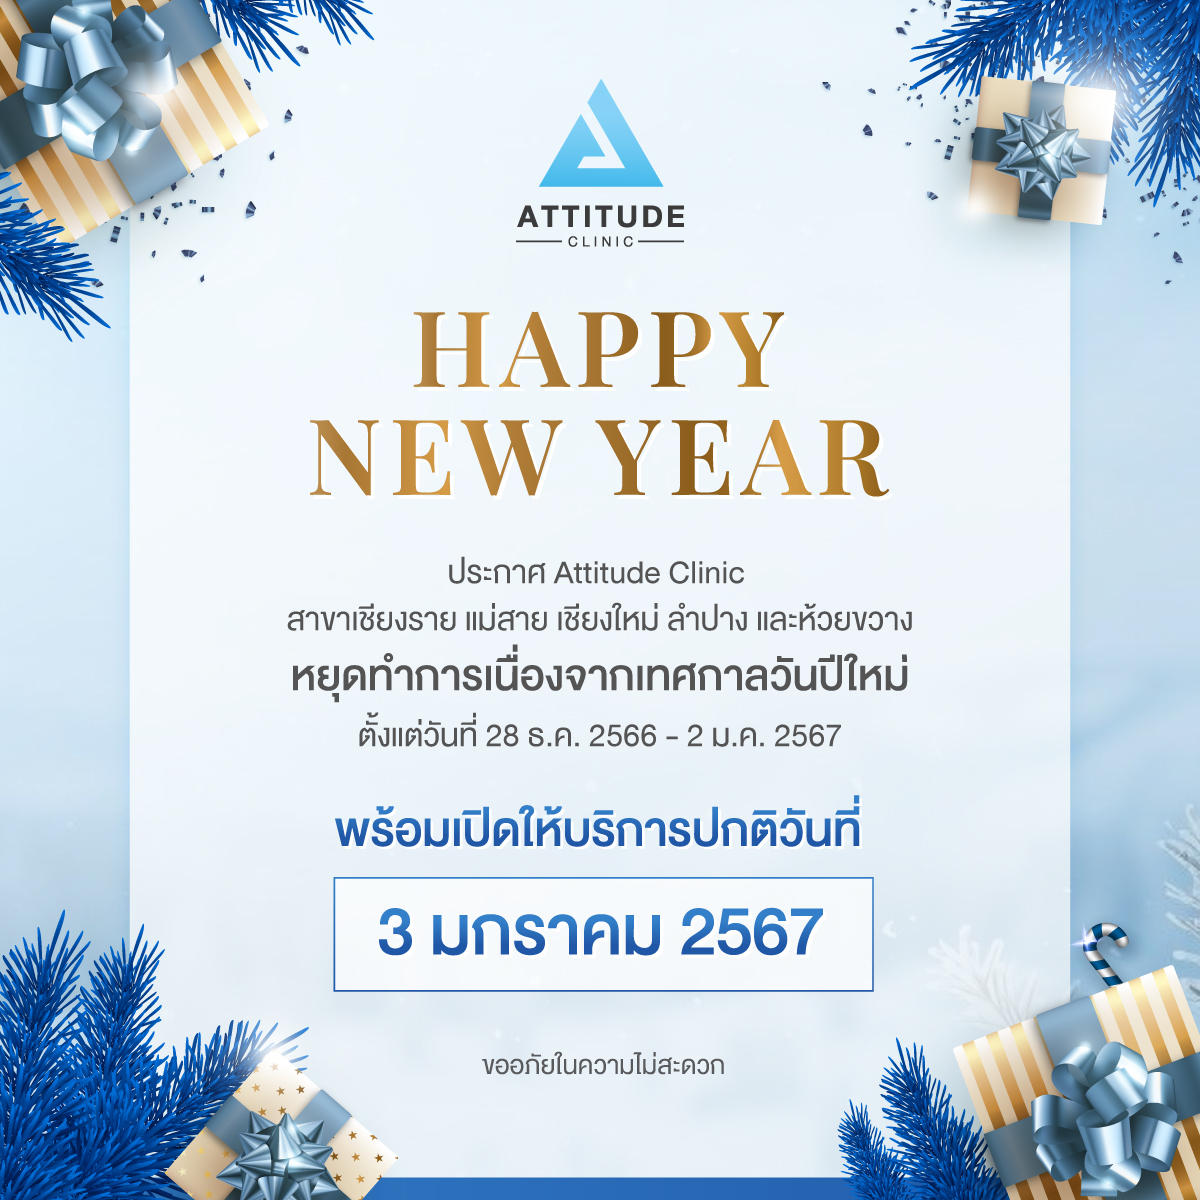 Attitude Clinic แจ้งหยุดทำการ ช่วงเทศกาลปีใหม่ 6 วัน ในวันที่ 28 ธันวาคม 2566 – 2 มกราคม 2567